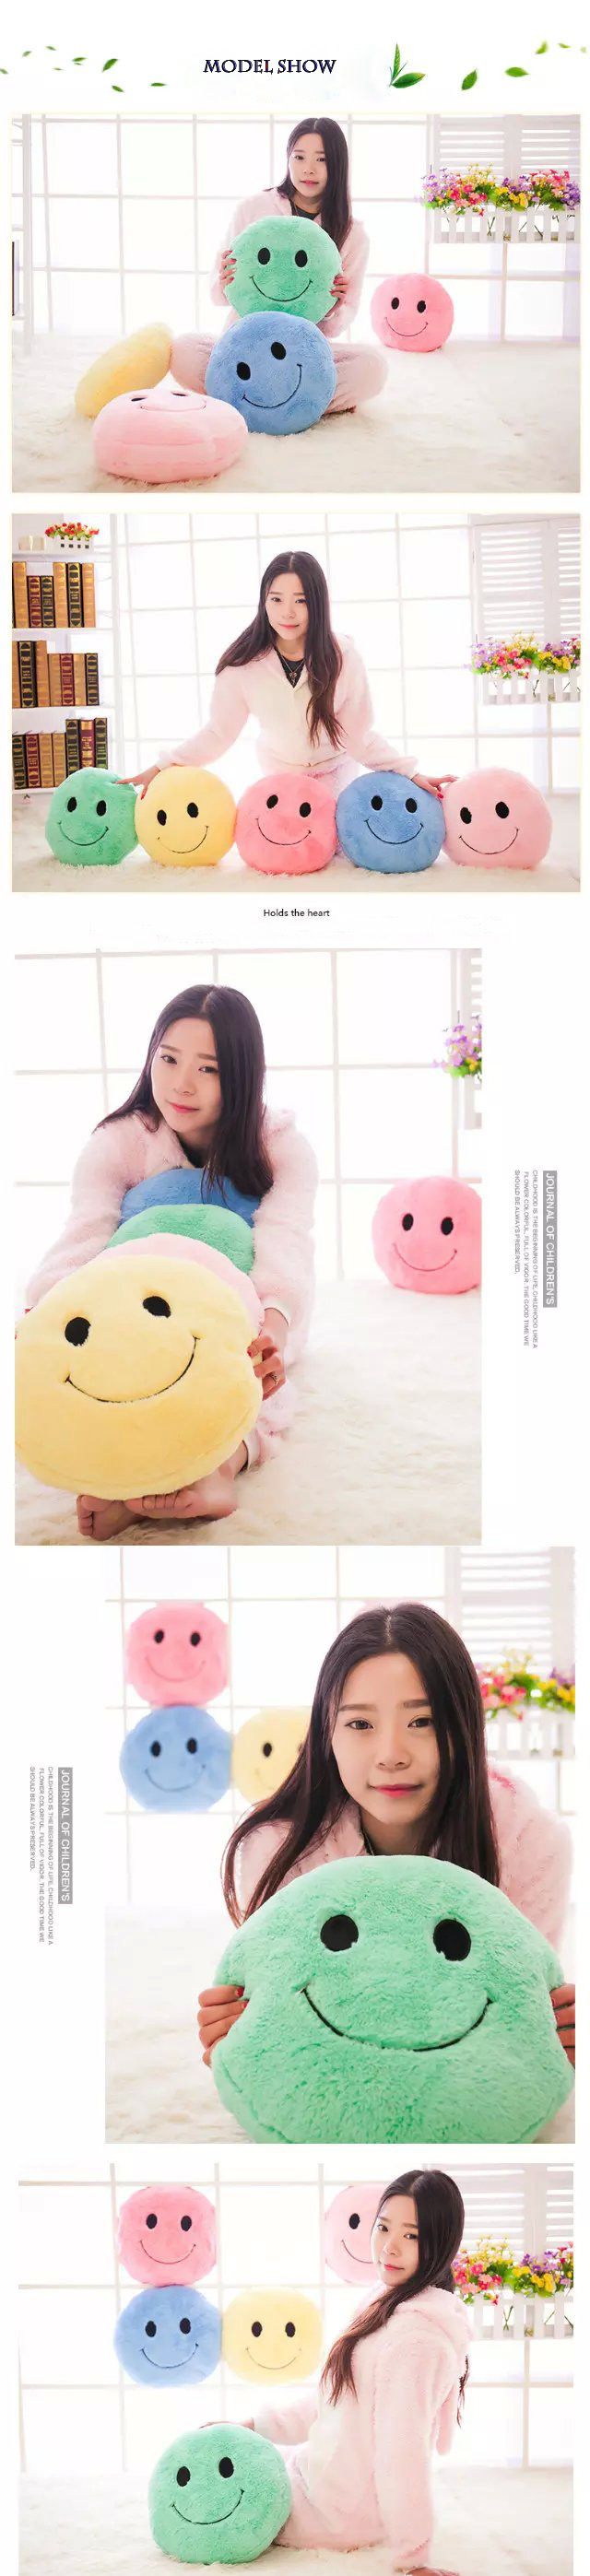 Cute-Smiling-Expression-Plush-Throw-Pillow-Soft-Sofa-Car-Office-Cushion-Home-Decor-Gift-1031409-4